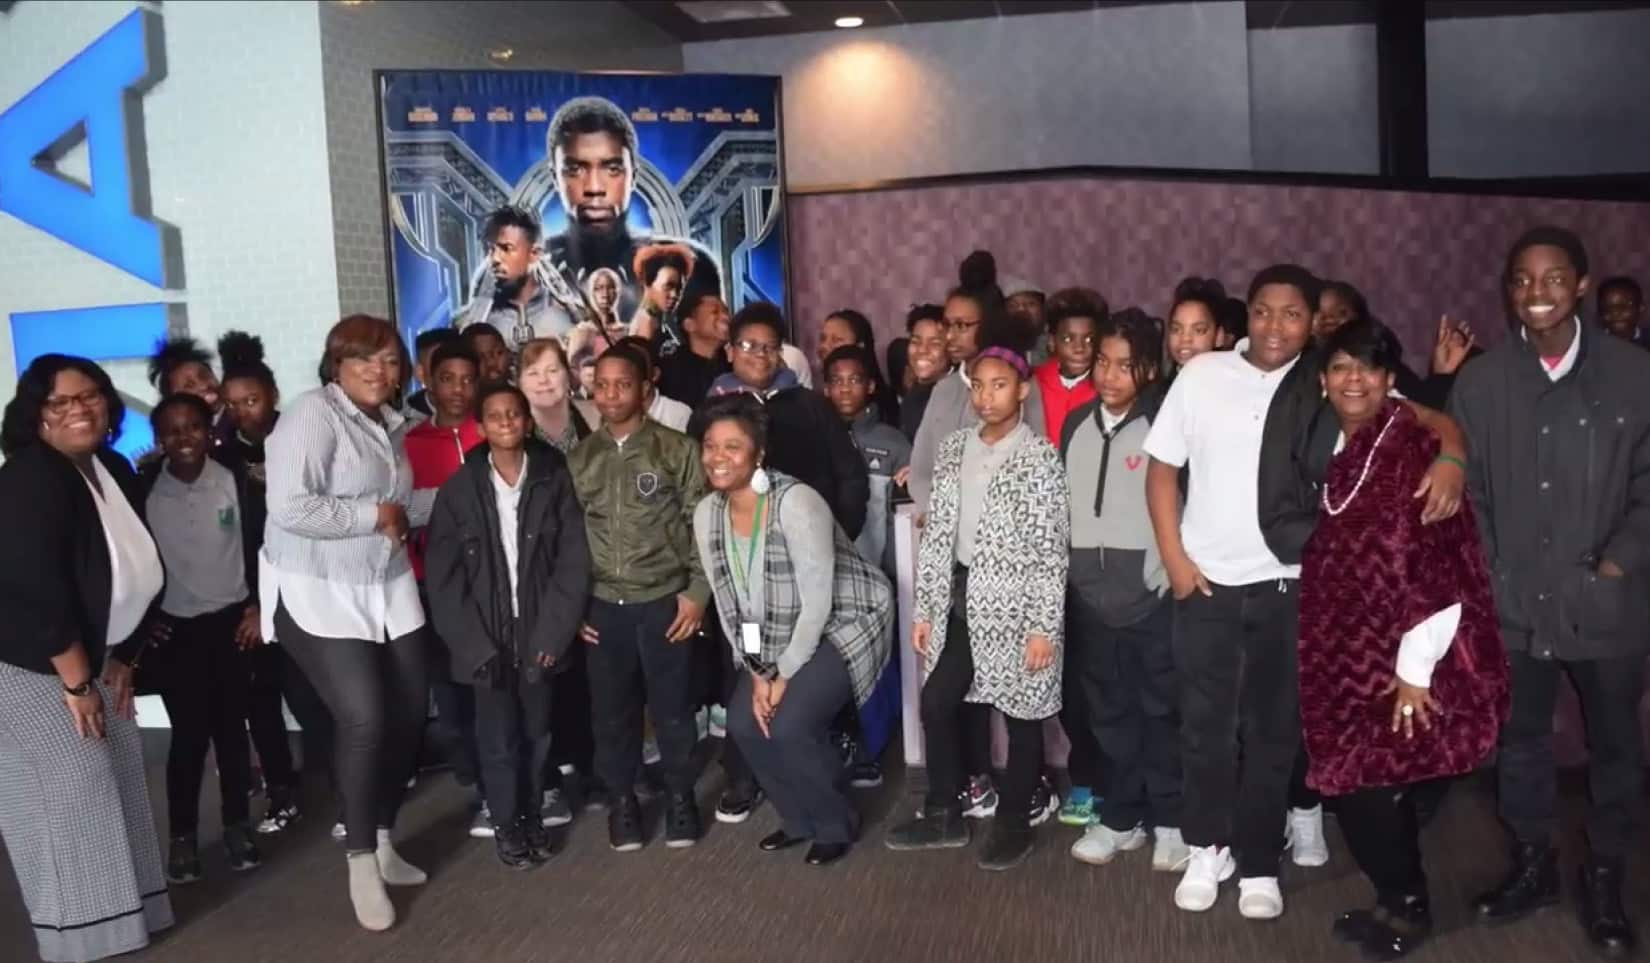 Marvel's Black Panther at Penn Cinema on the Riverfront